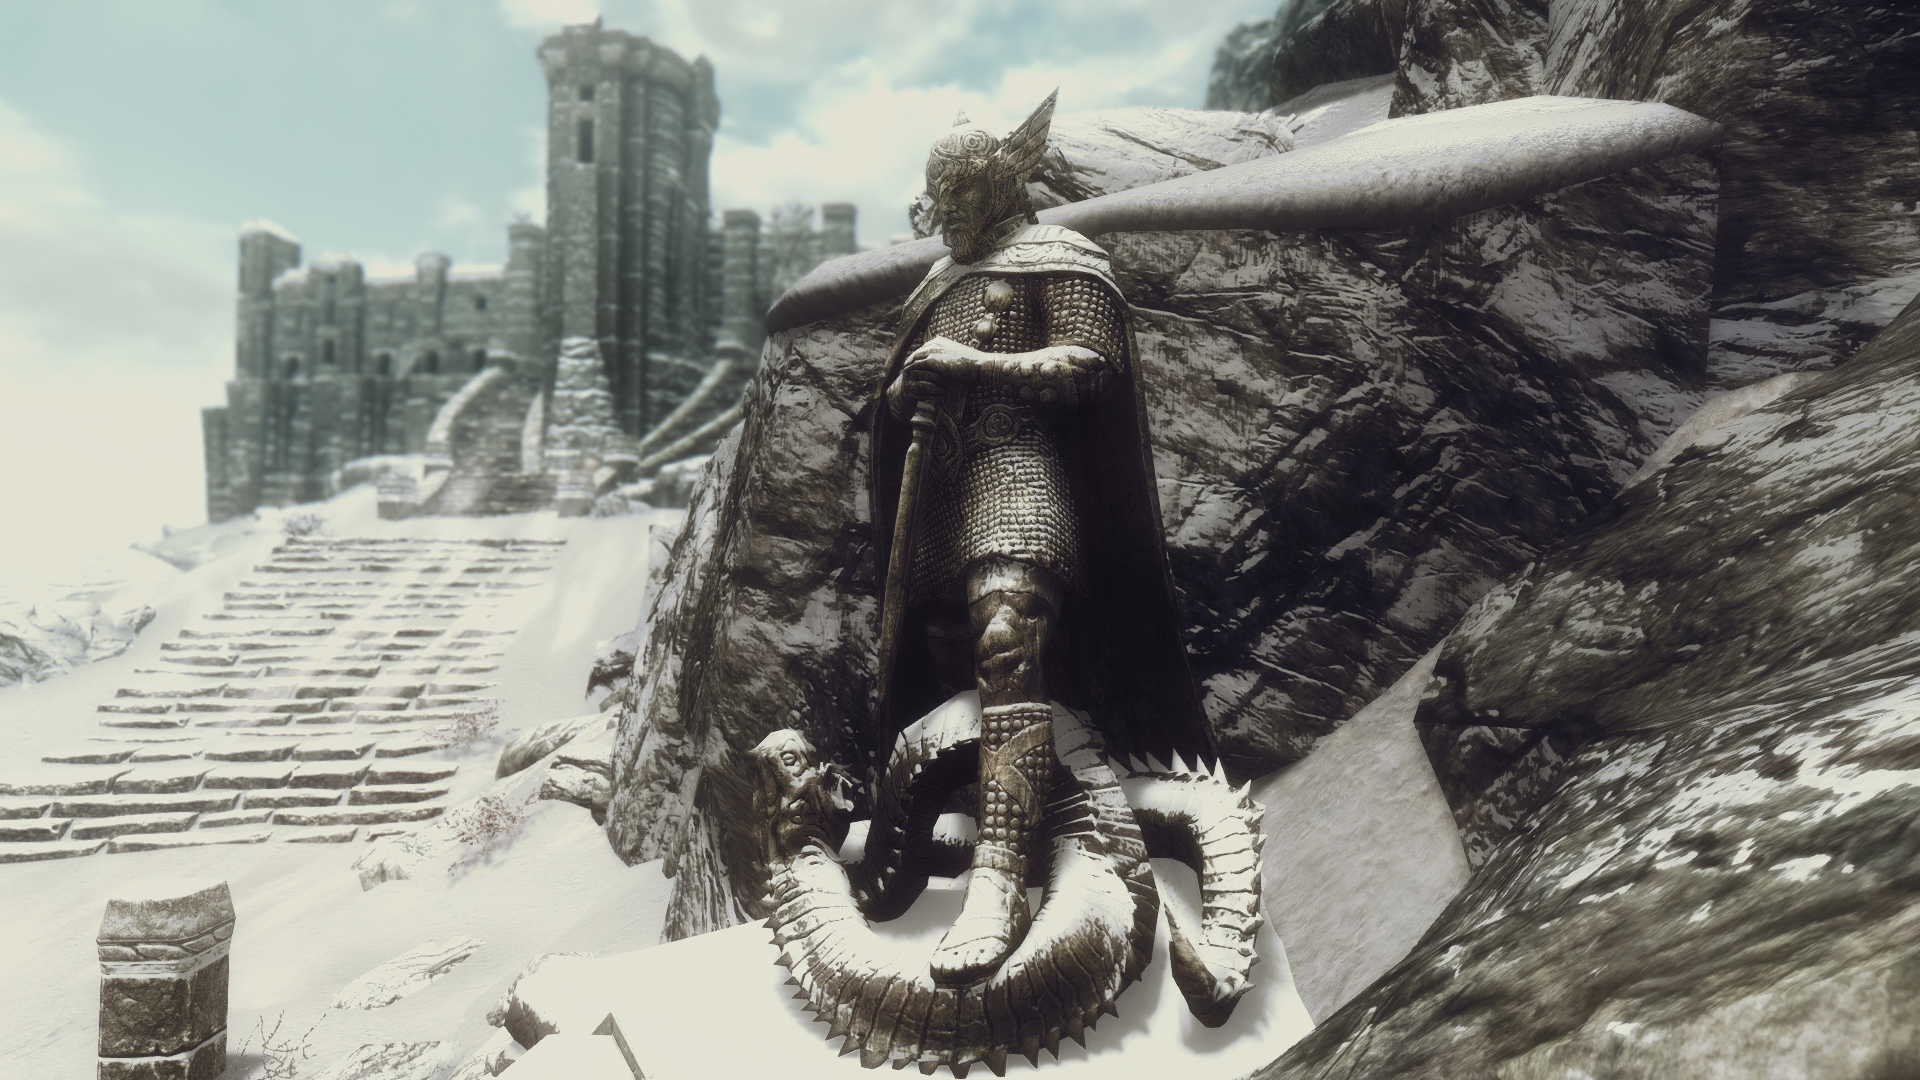 General 1920x1080 video games The Elder Scrolls V: Skyrim RPG screen shot Bethesda Softworks statue